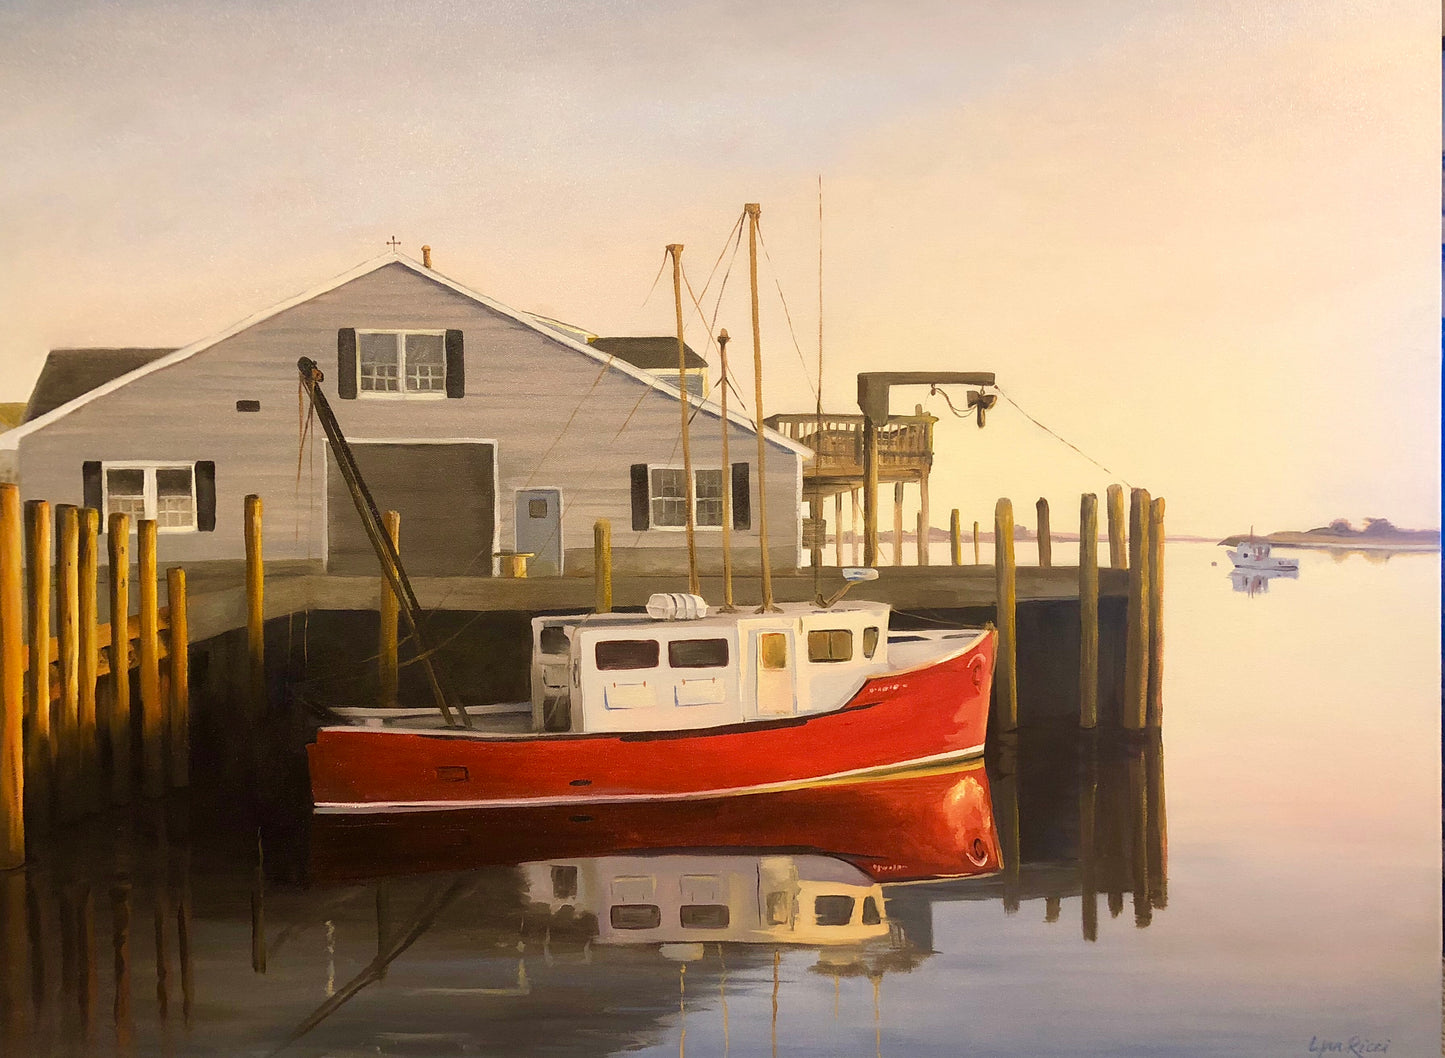 Chatham Red Boat at Dawn - Artwork of Lynn Ricci